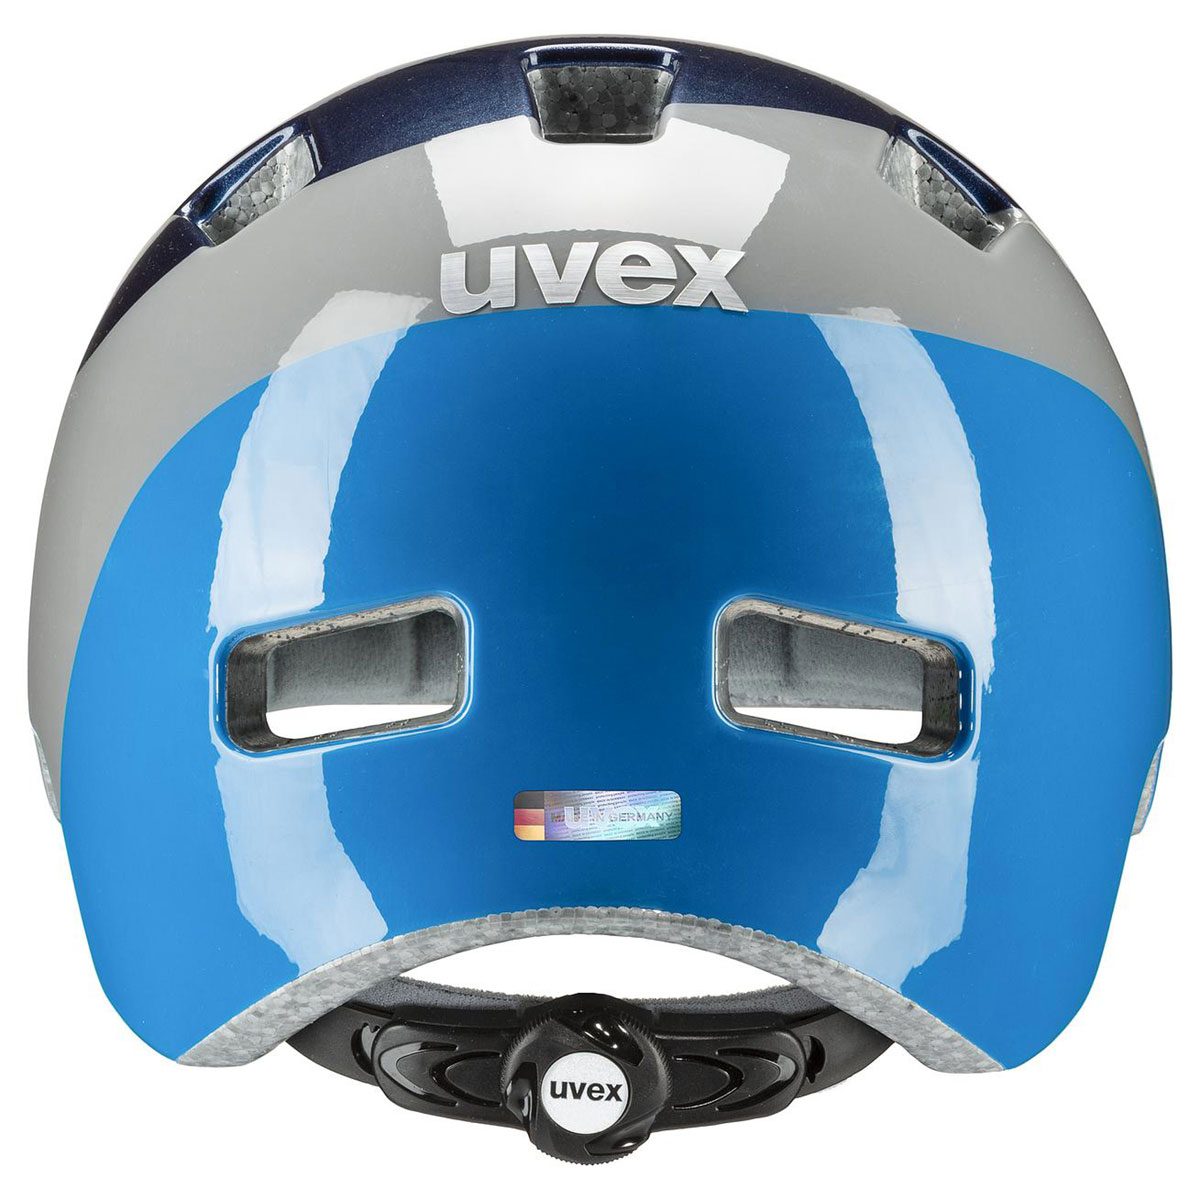 UVEX Hlmt 4 Deep Space-blue Wave (s4109801000)